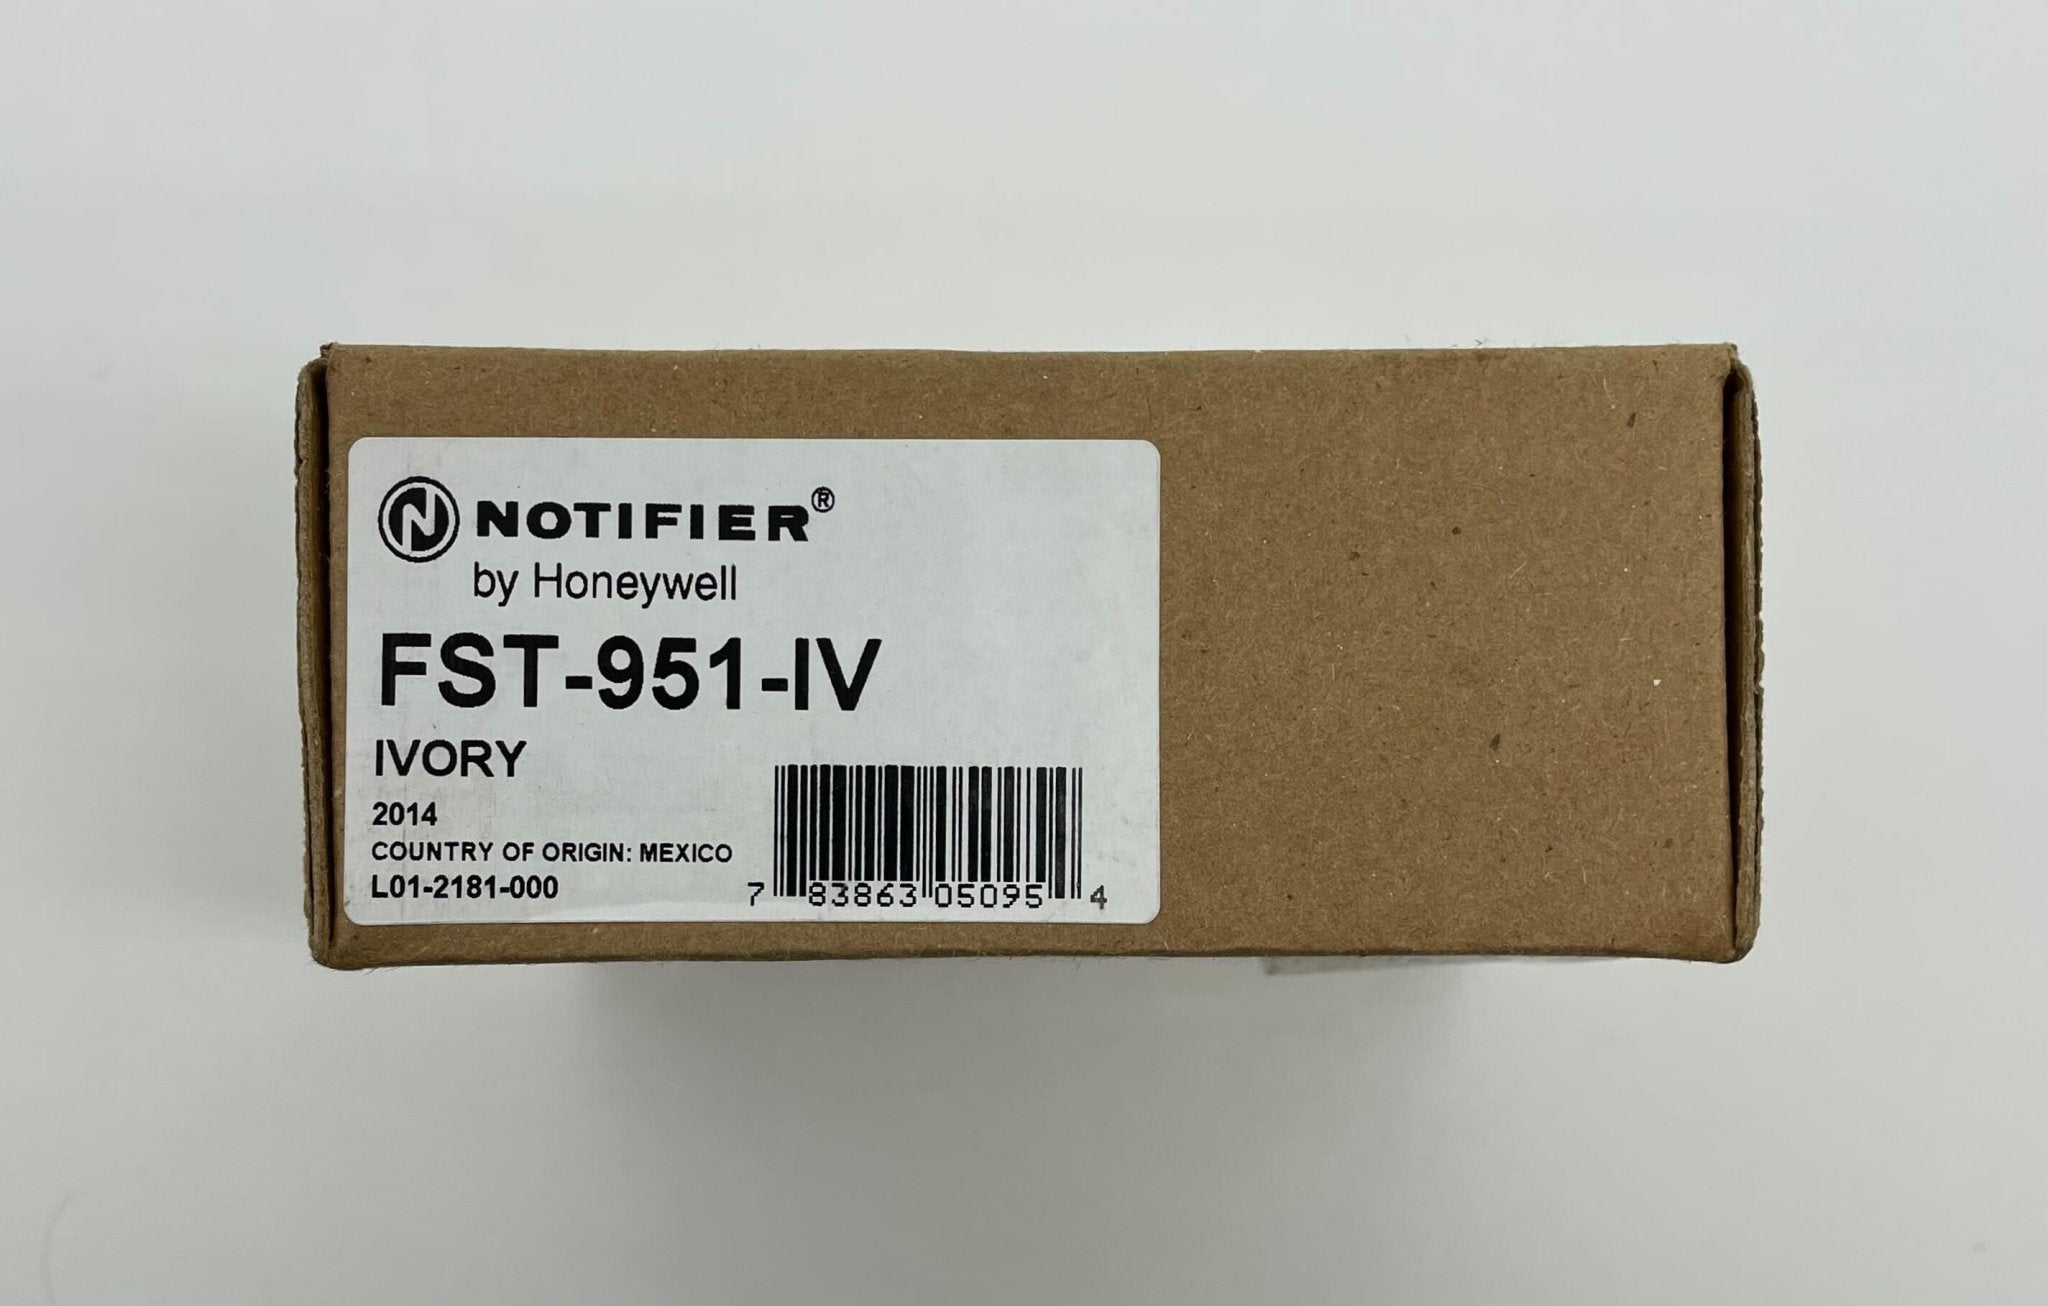 Notifier FST-951-IV - The Fire Alarm Supplier